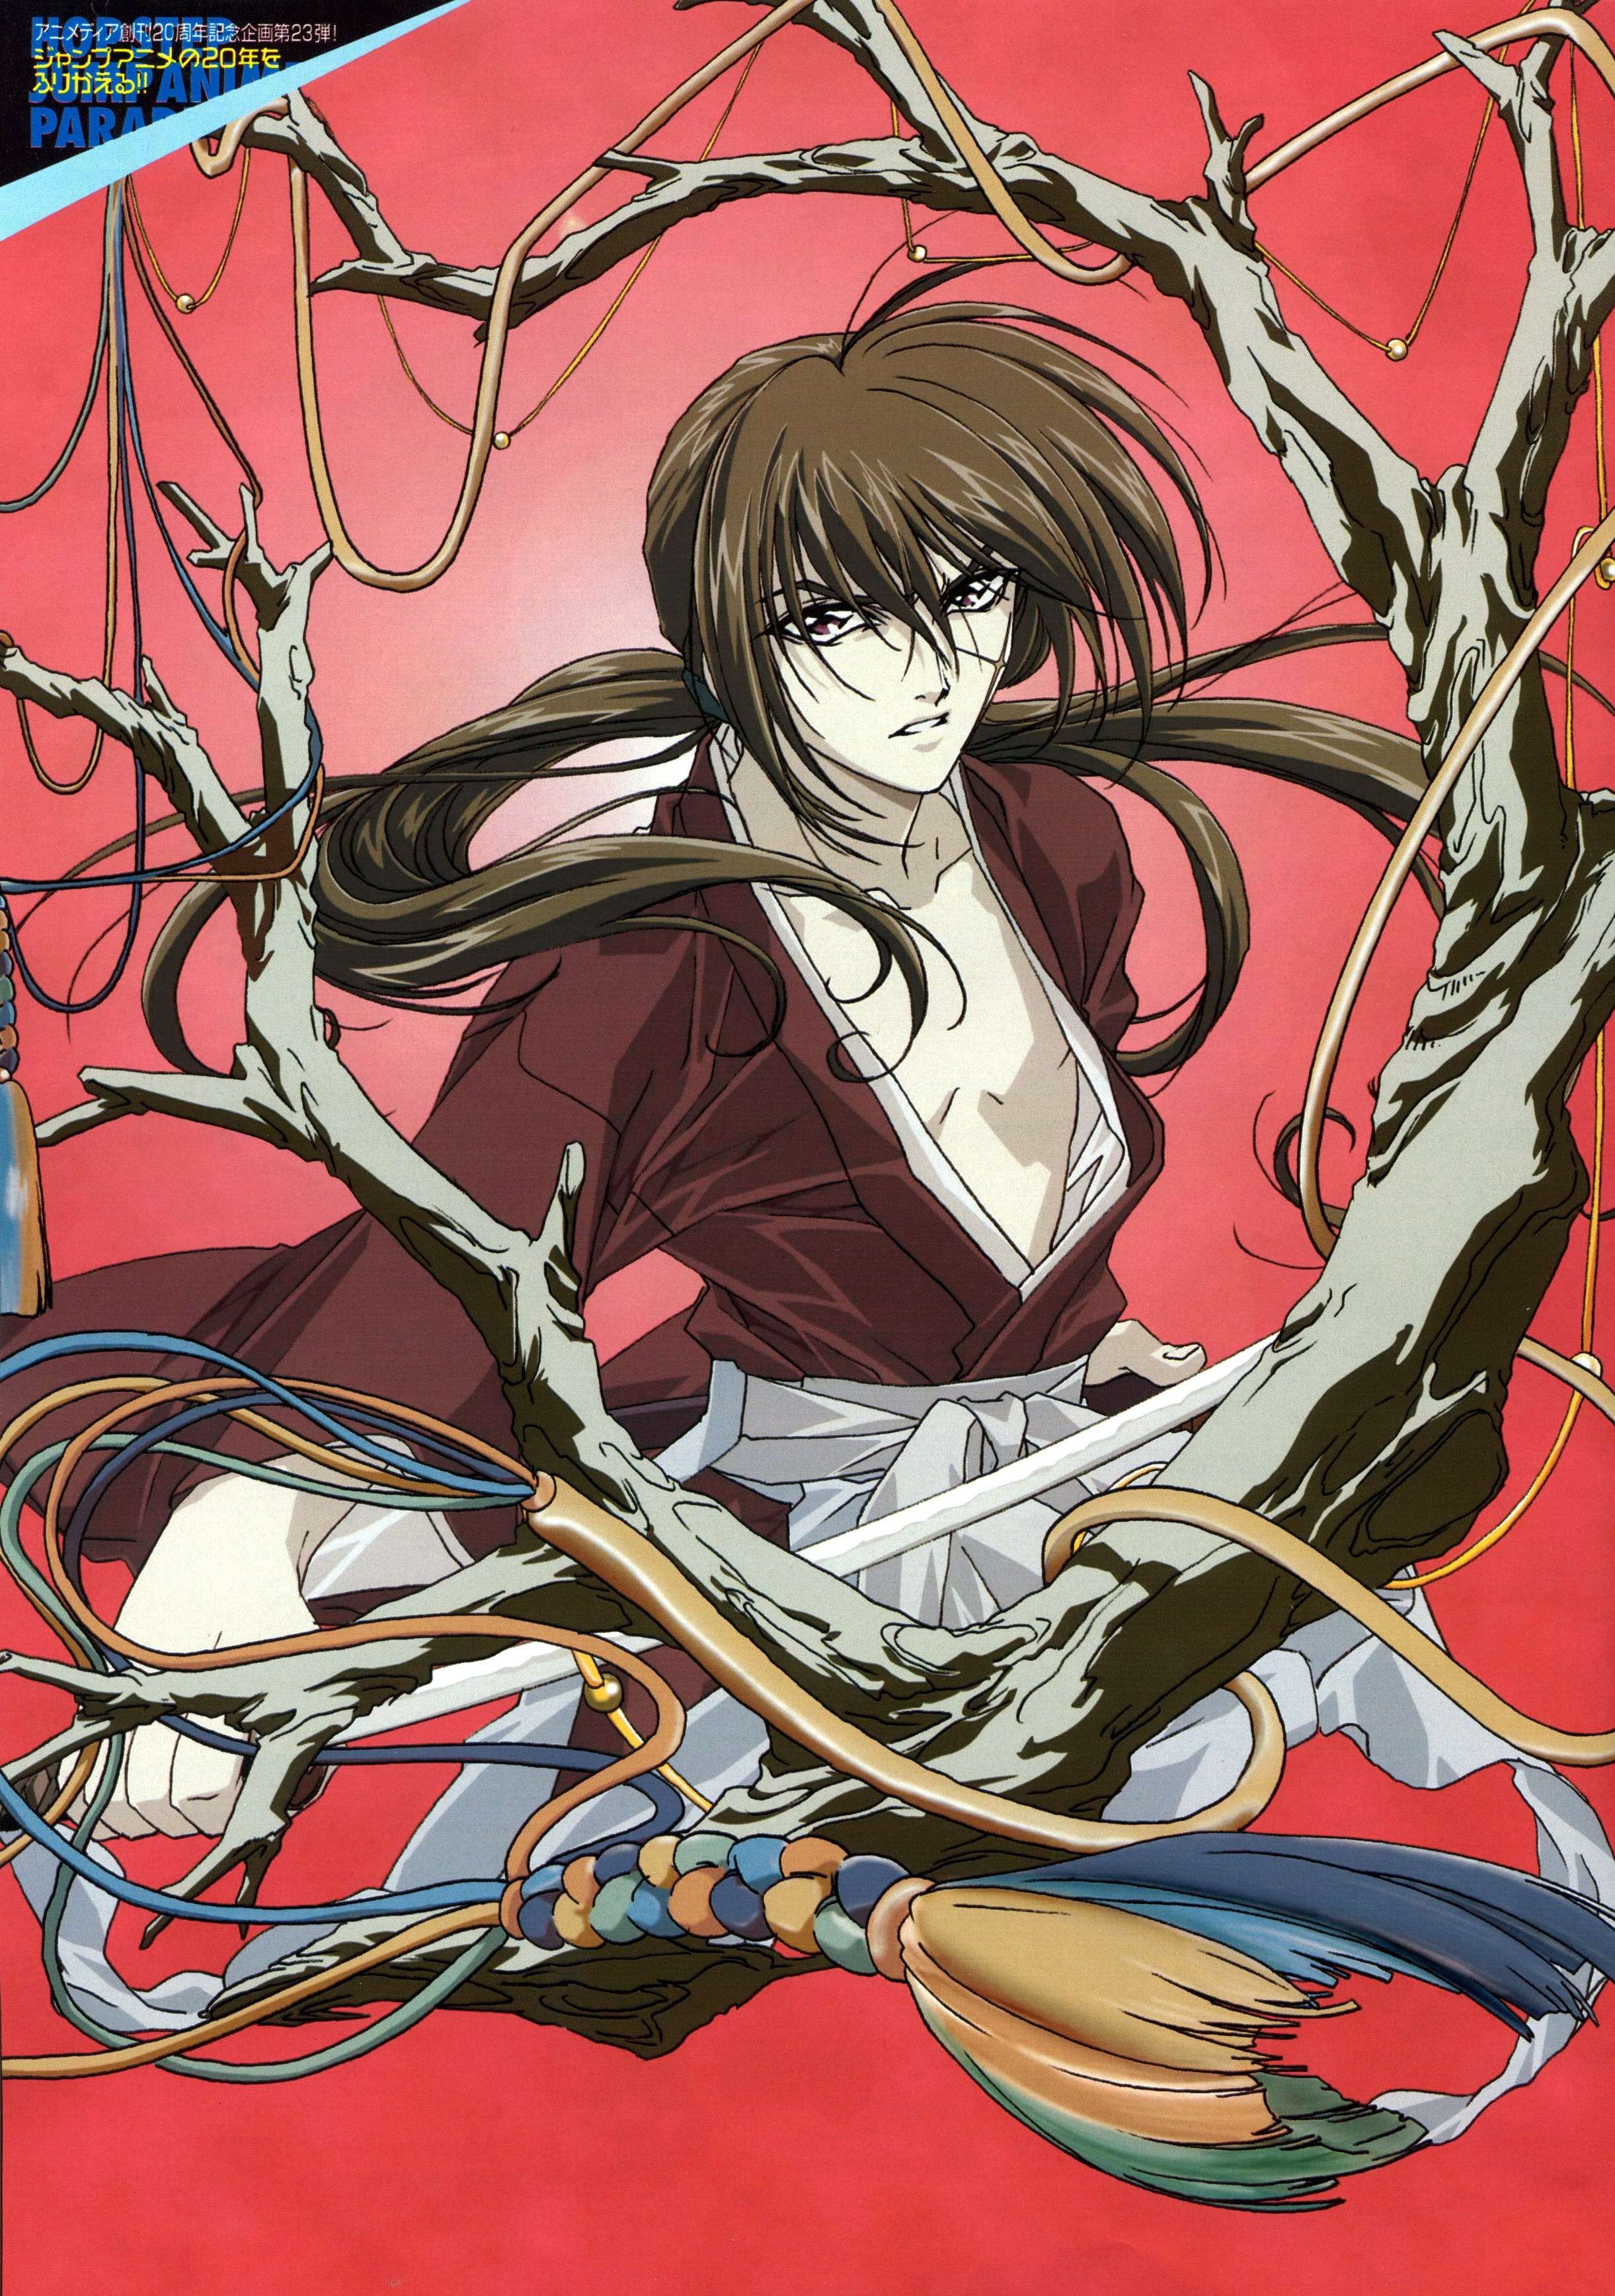 Anime Rurouni Kenshin Hd Wallpapers Desktop And Mobile Images Photos